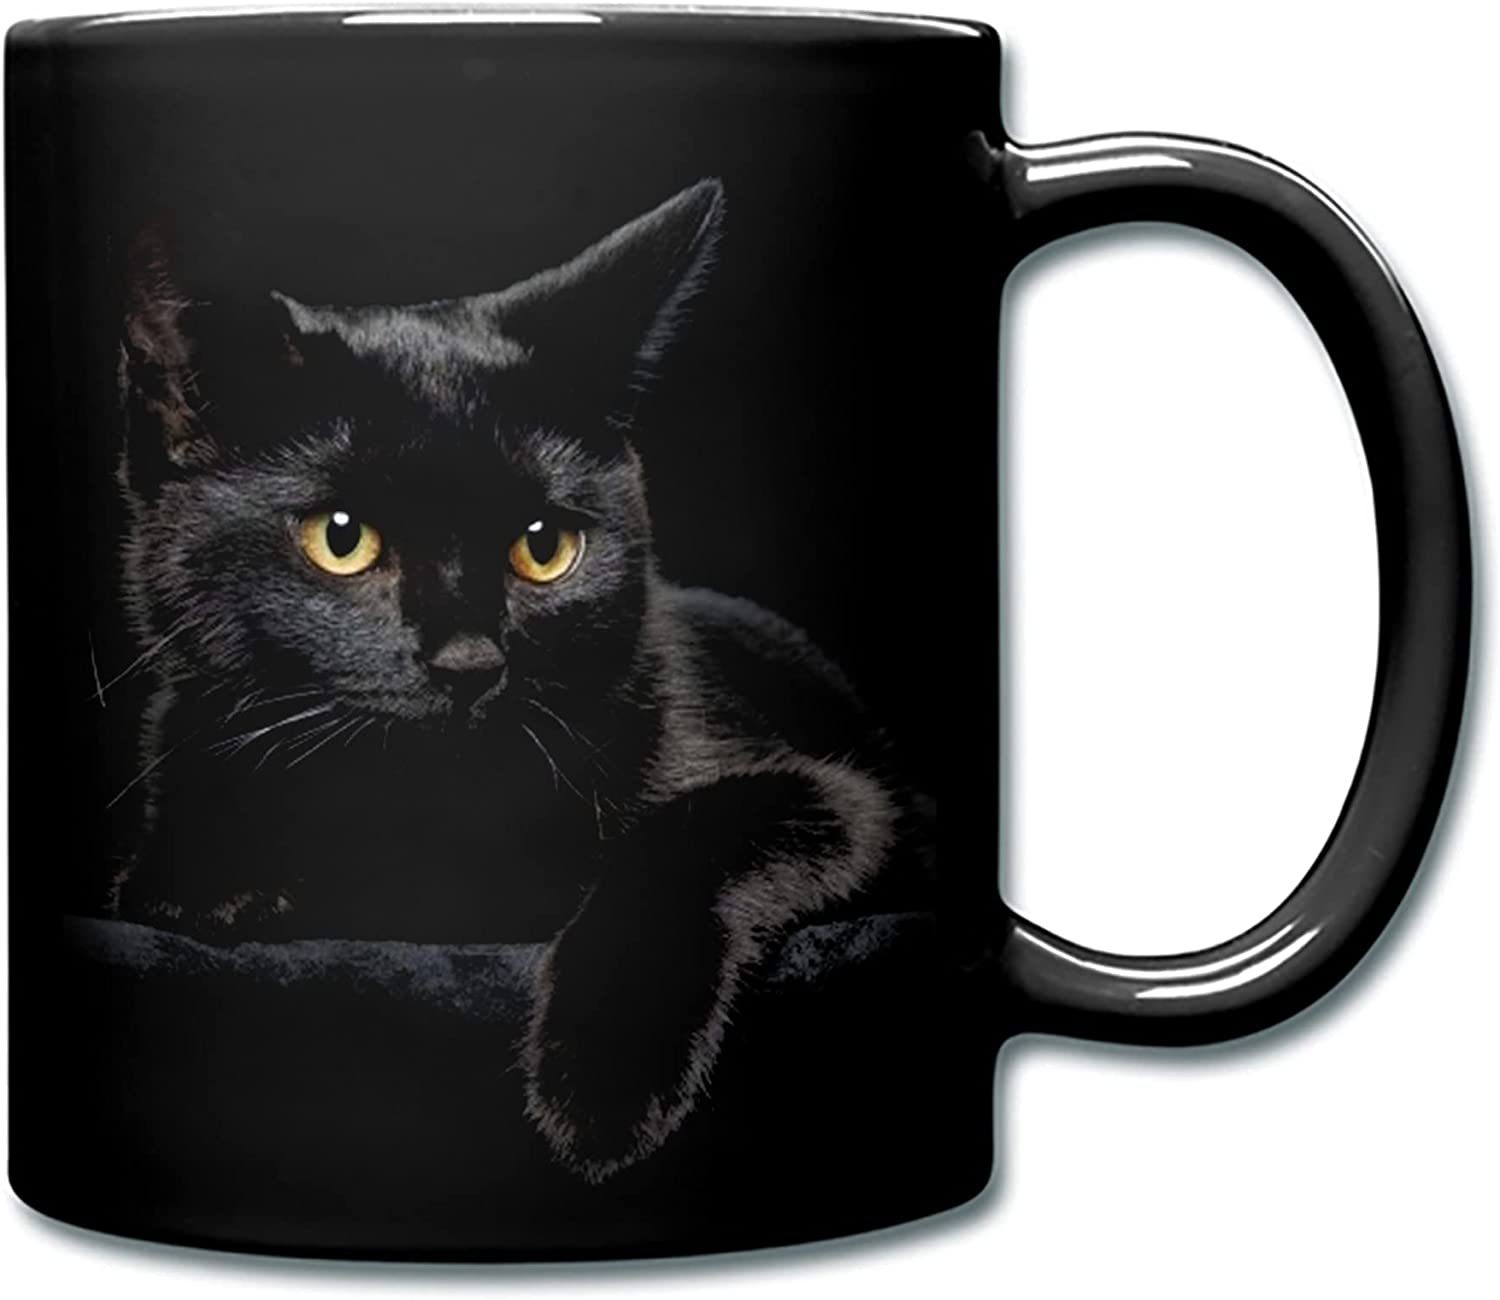 Black Cat Coffee Mug, Ceramic Coffee Mug, Cute Cat Lover Gift, Cute Cat Coffee Mugs Gift for Cat Lovers